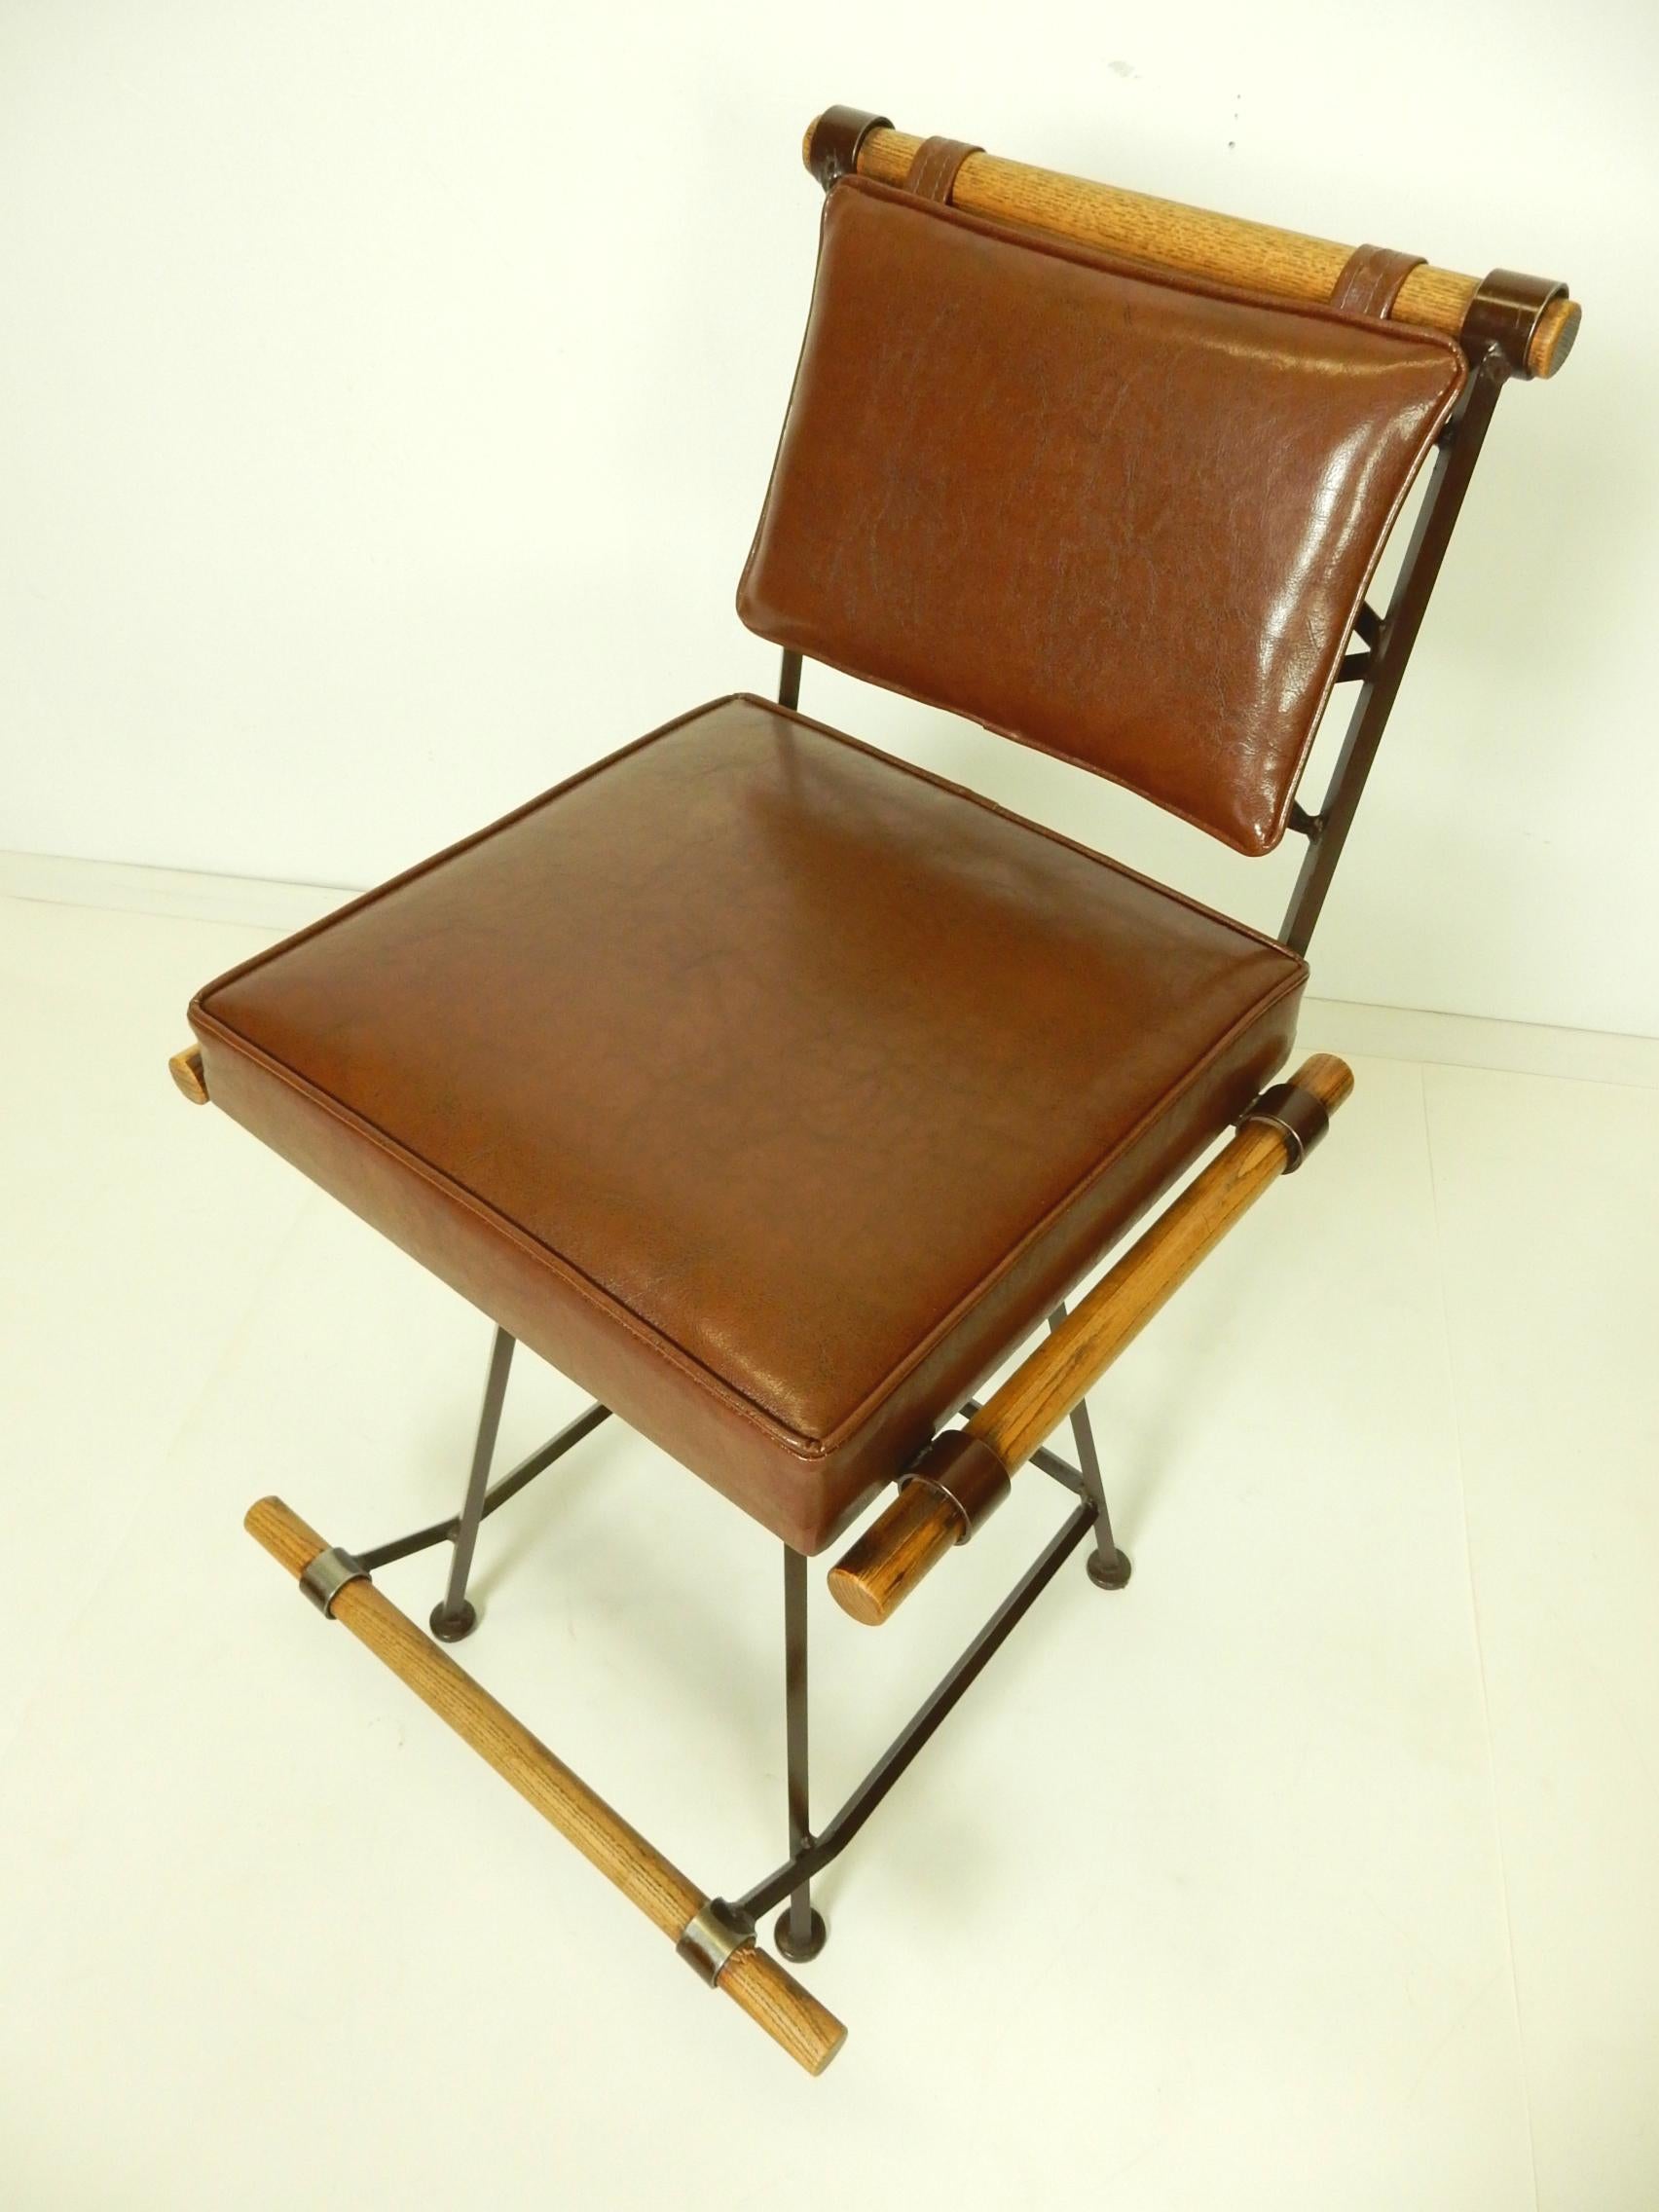 cleo baldon stools